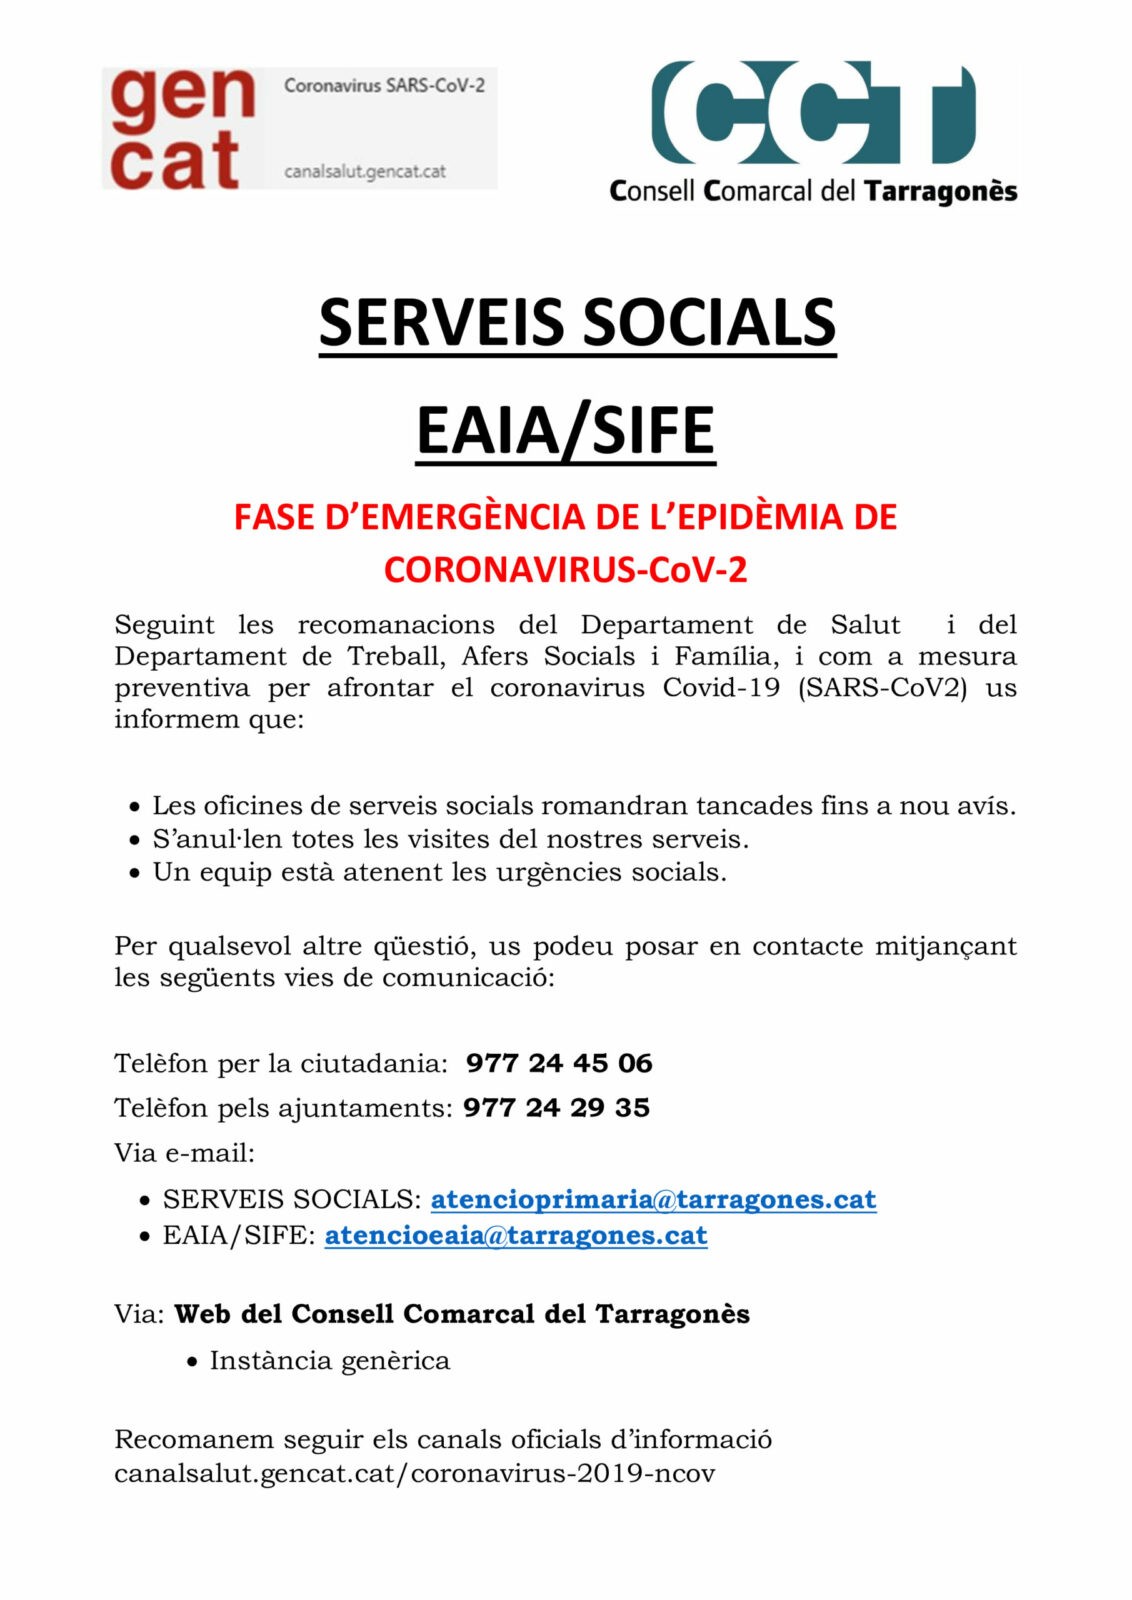 CCT – SERVEIS SOCIALS EAIA / SIFE